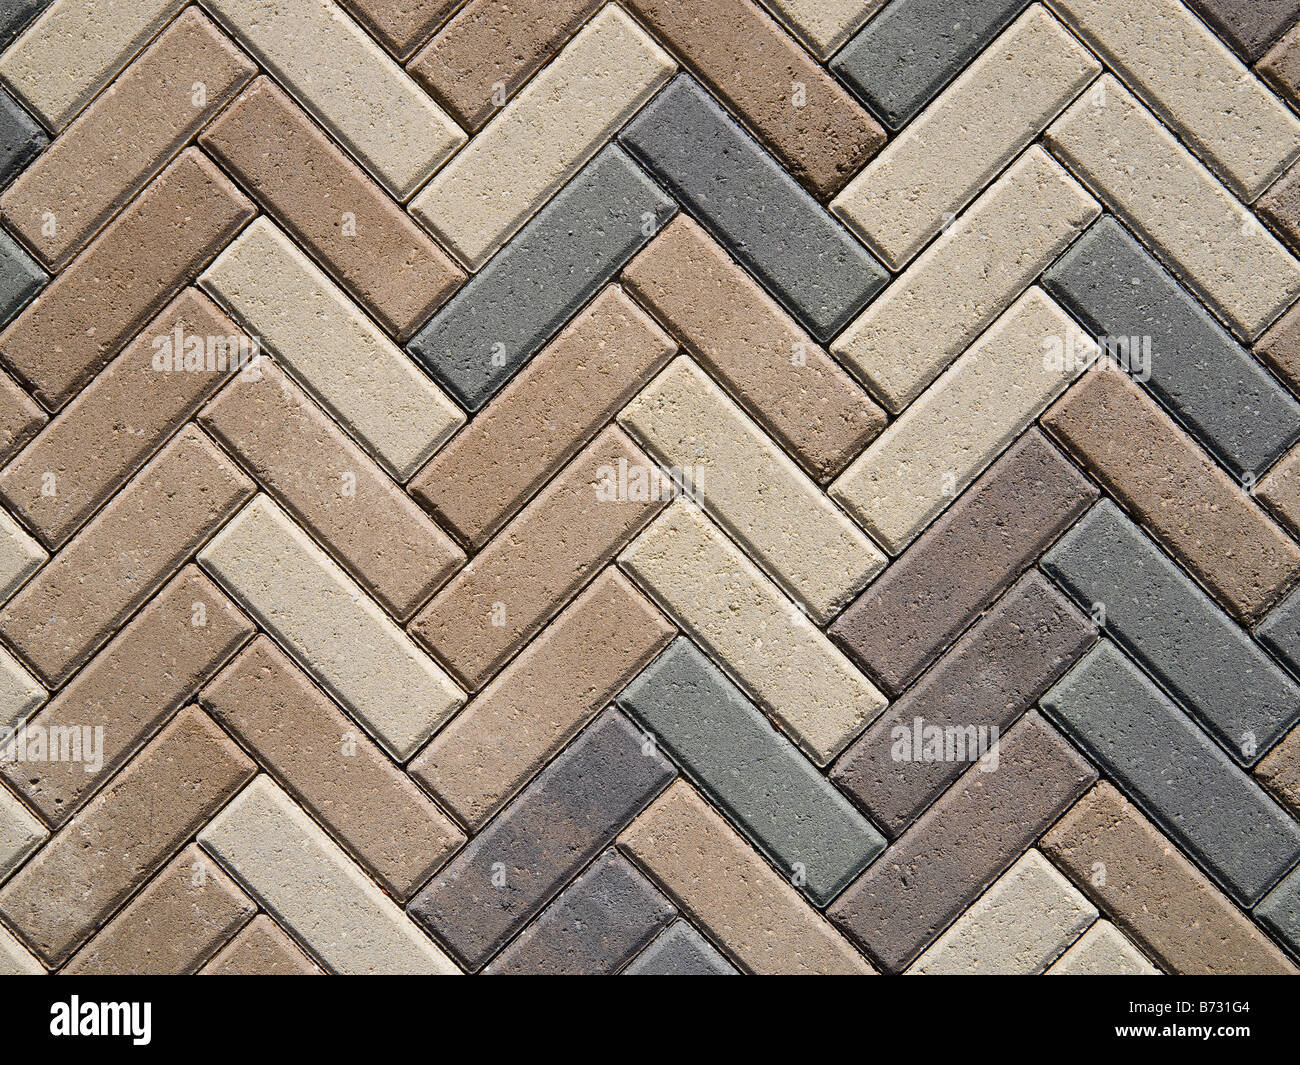 Brick pavers in a herringbone pattern Stock Photo - Alamy